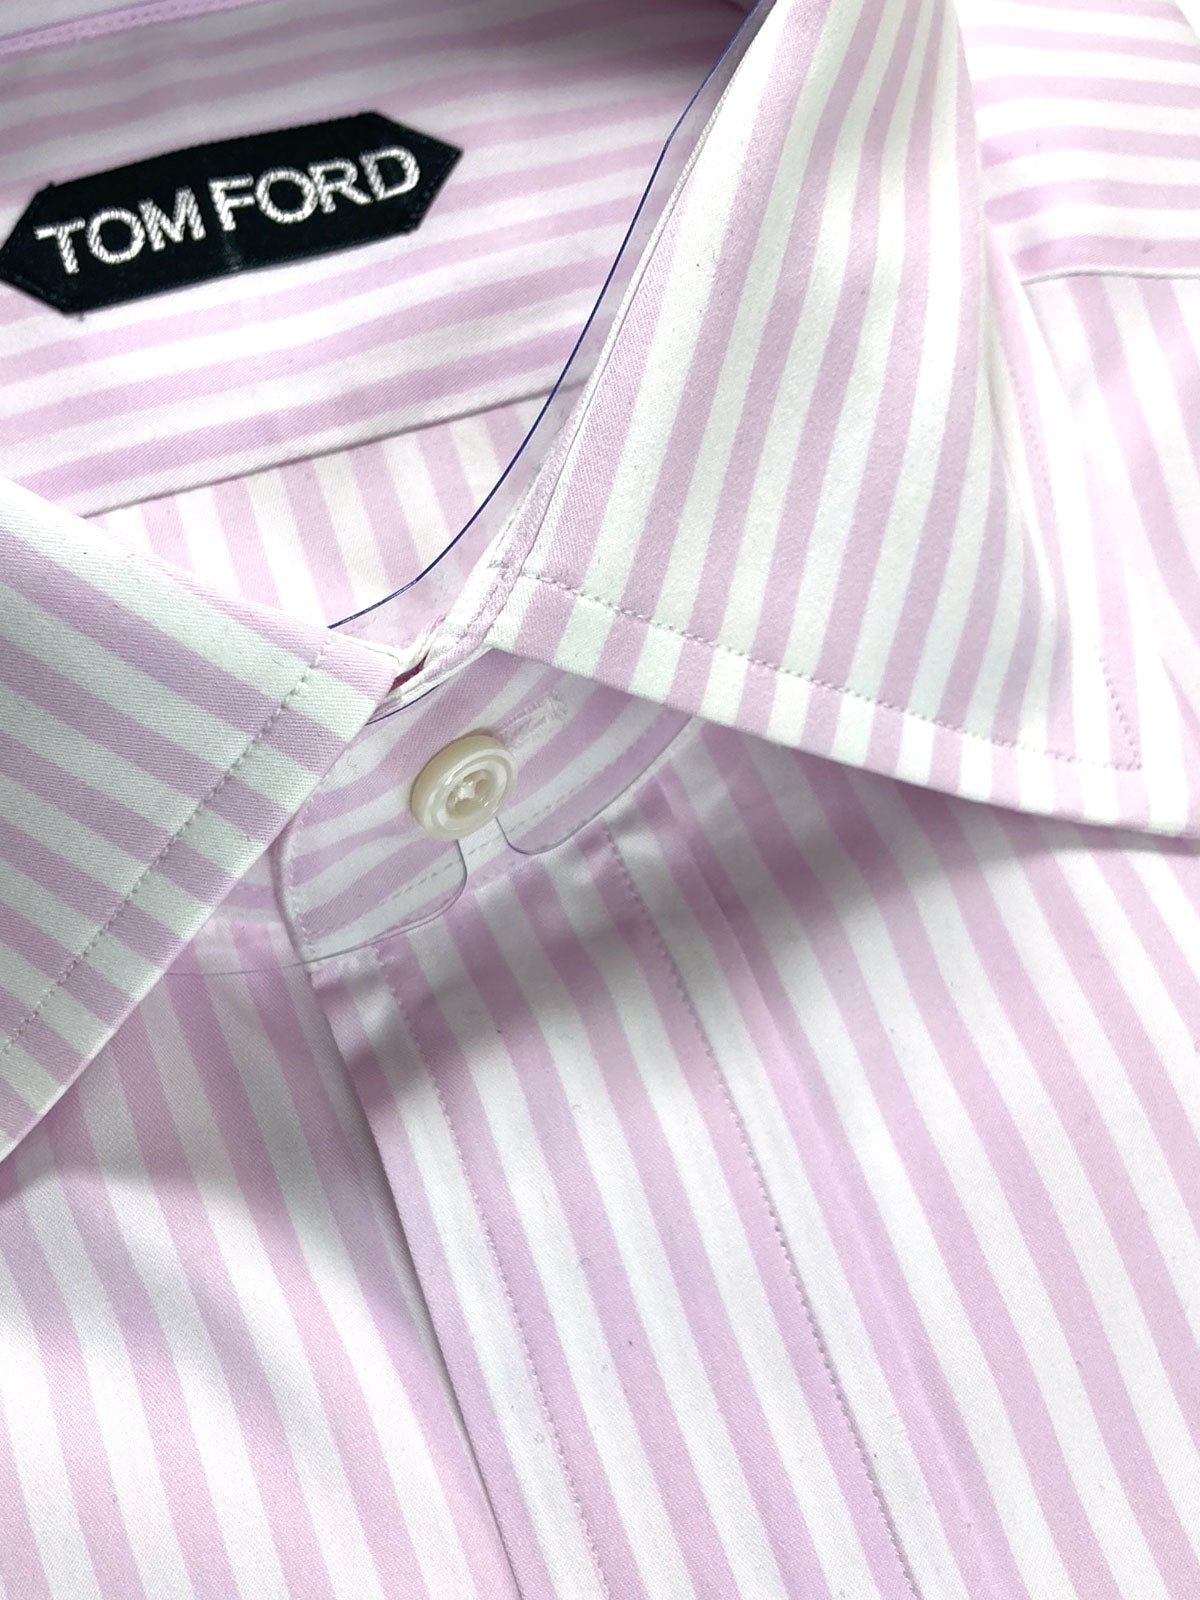 Tom Ford Dress Shirt Pink Stripes Modern Fit 39 - 15 1/2